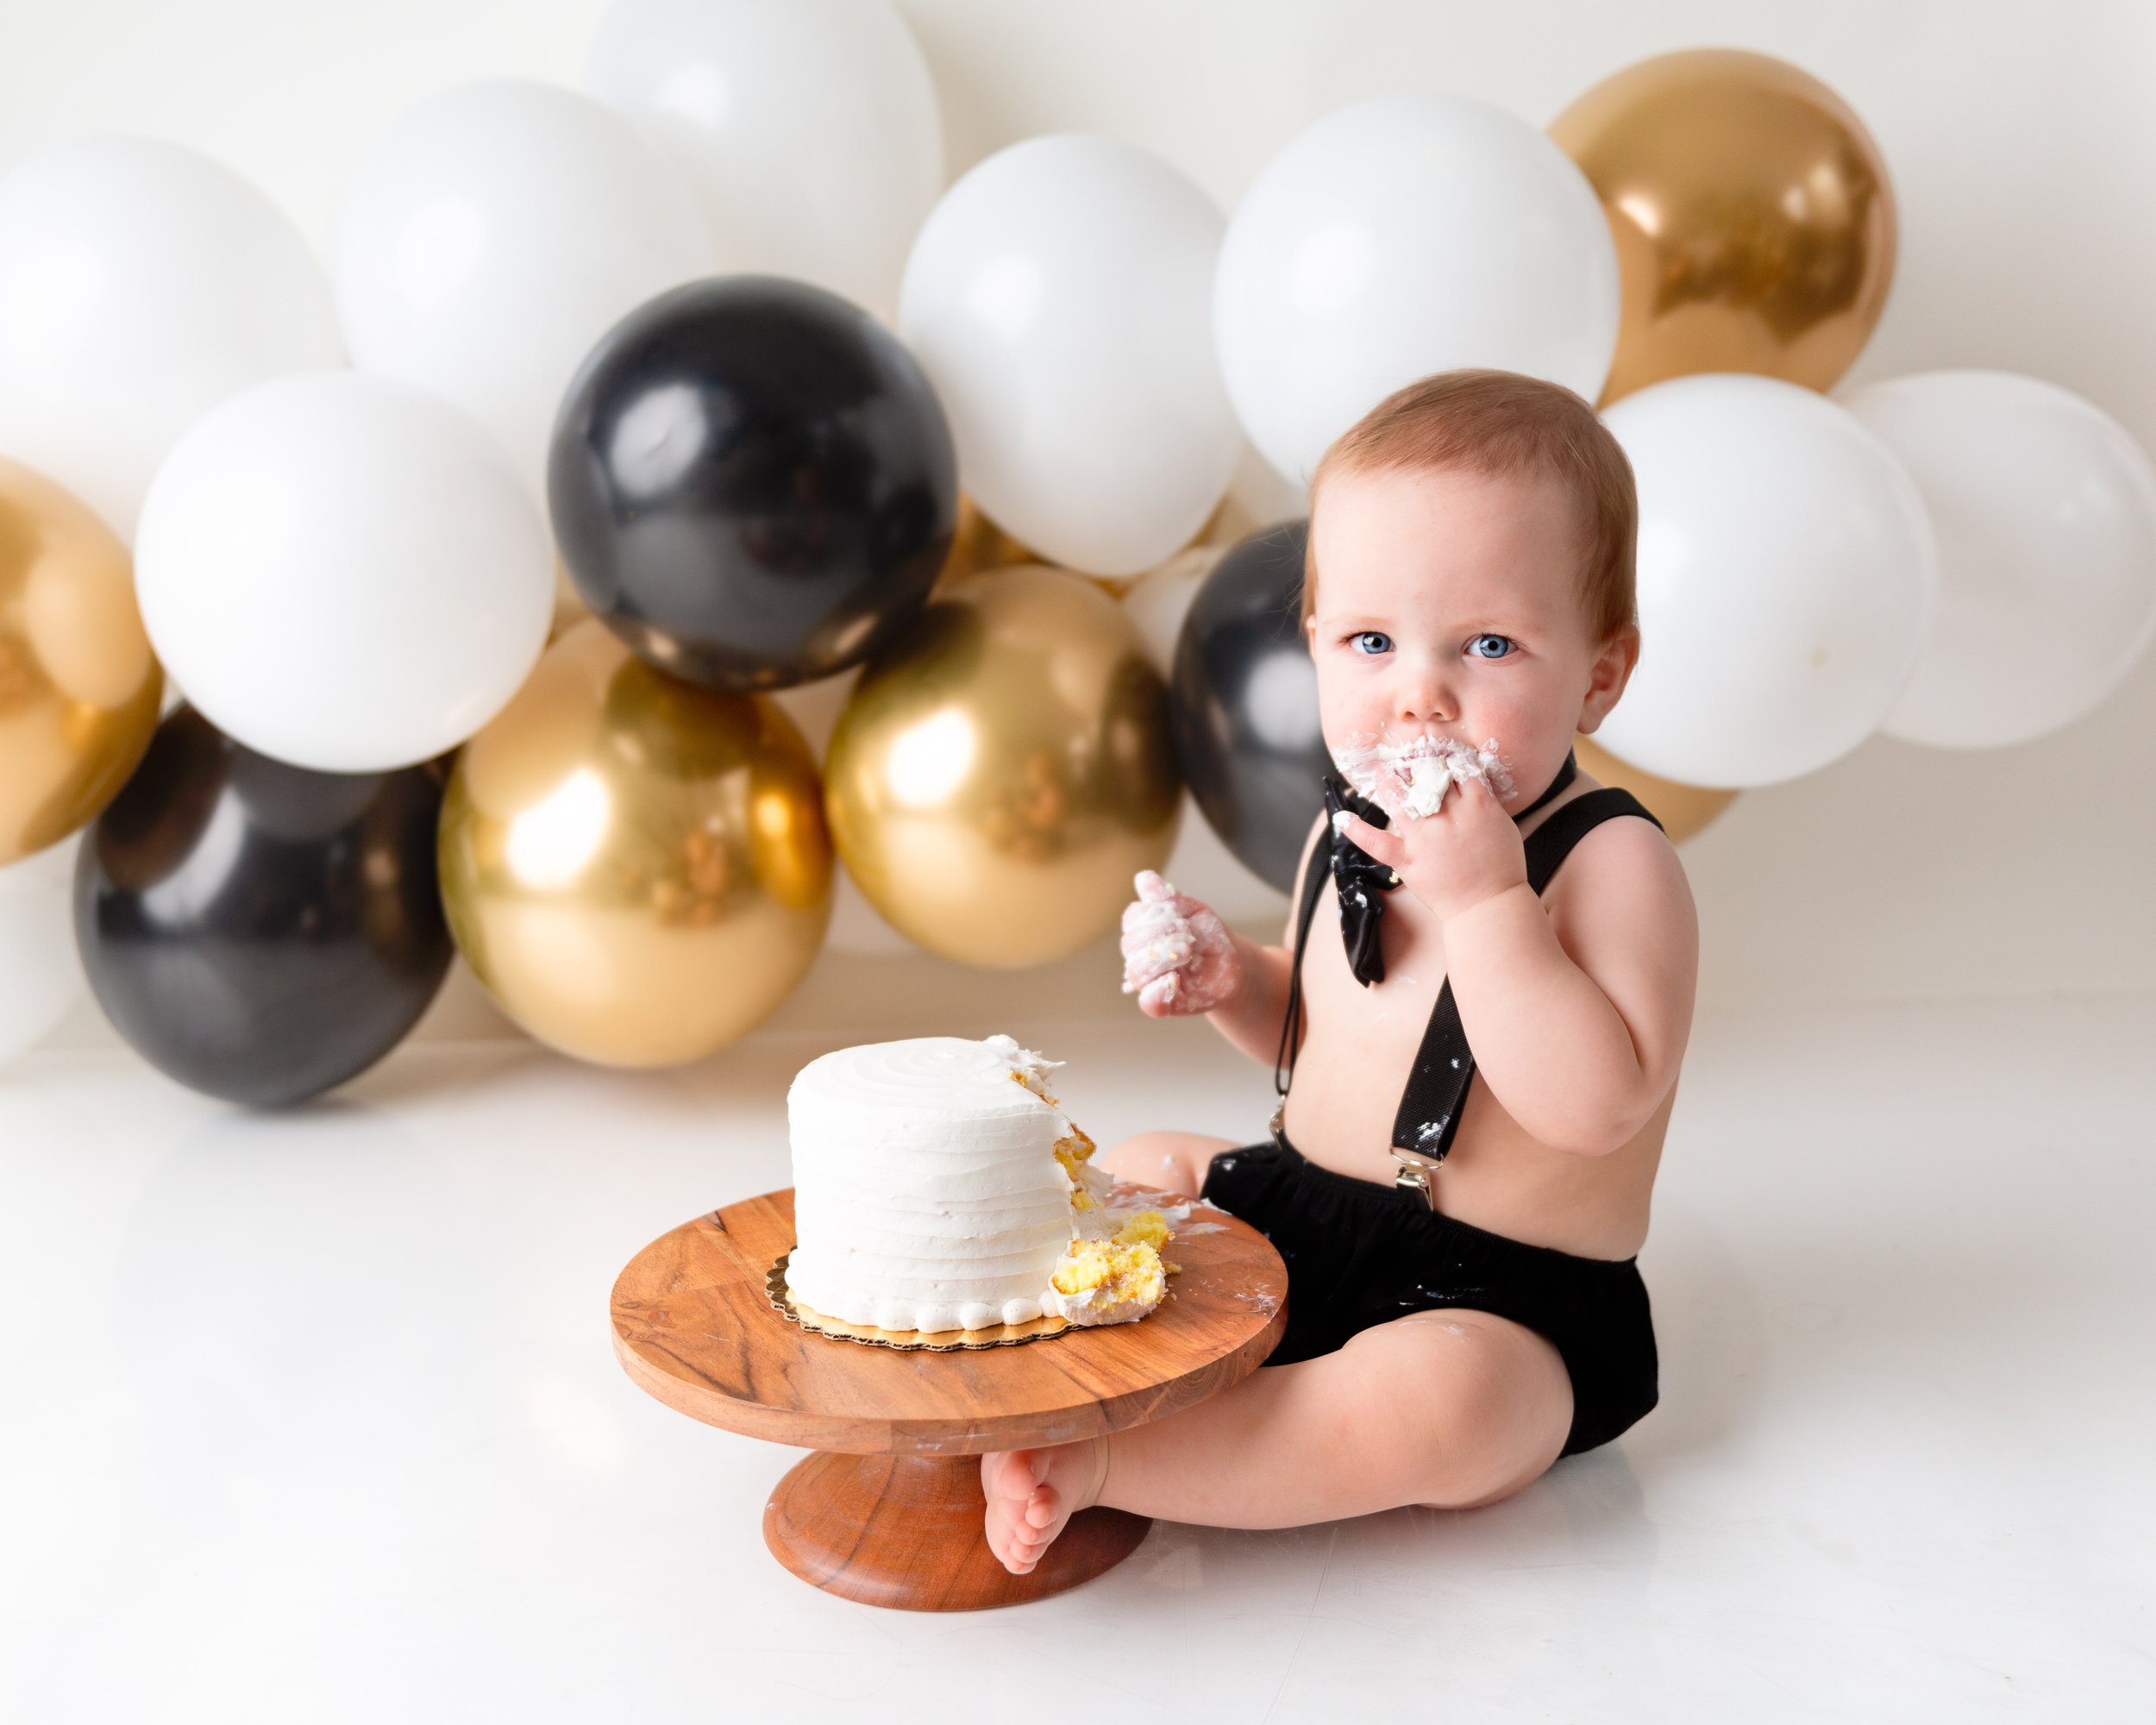 Cake-smash-photos-first-birthday-photography-baby-images-milestone-newborn-famiy-spokane-washington-3.jpg